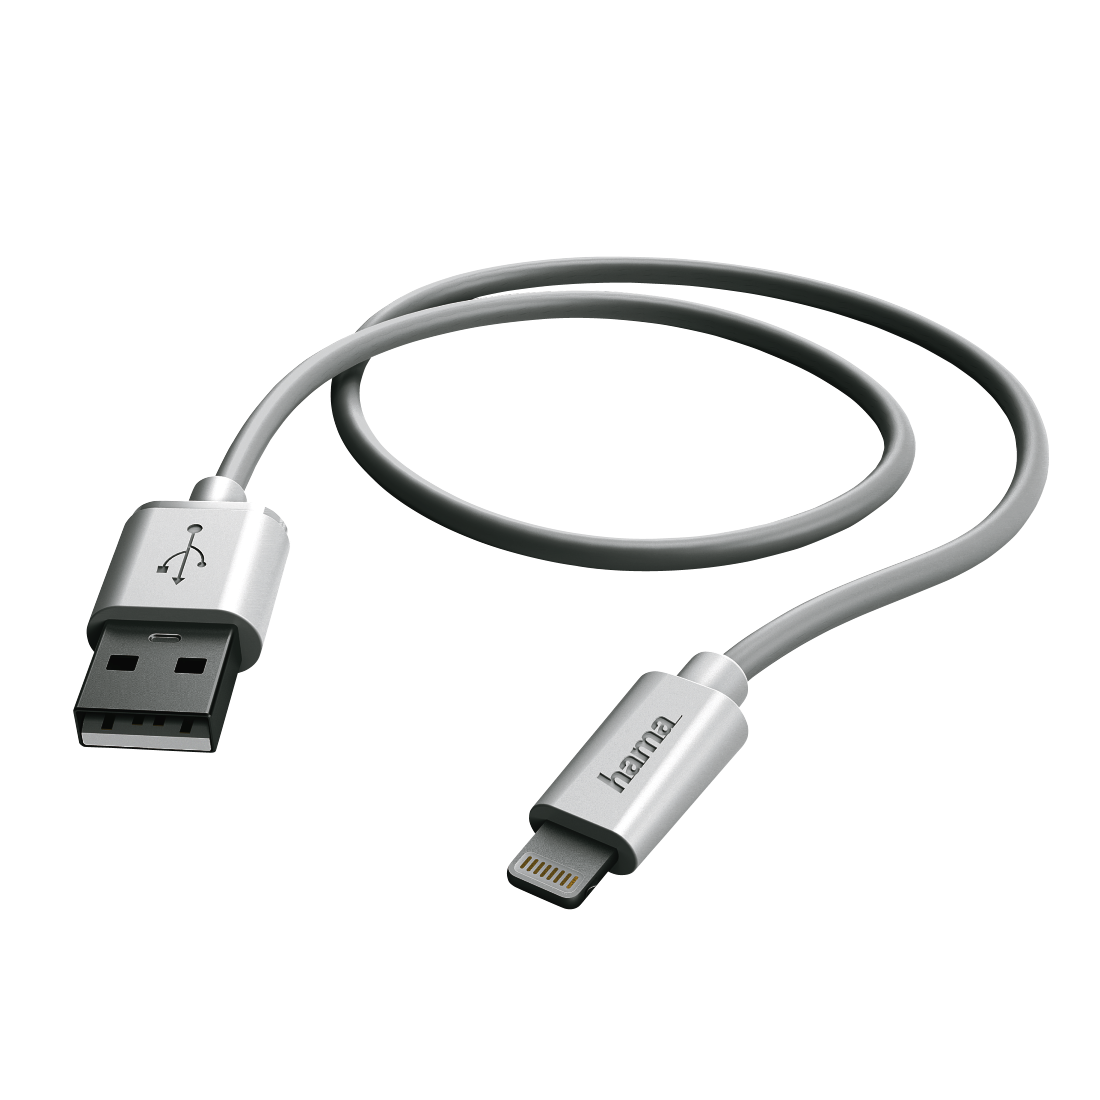 00138222 Hama USB Cable for Apple iPhone/iPod/iPad with Lightning  Connection, MFI, 1 m | hama.com